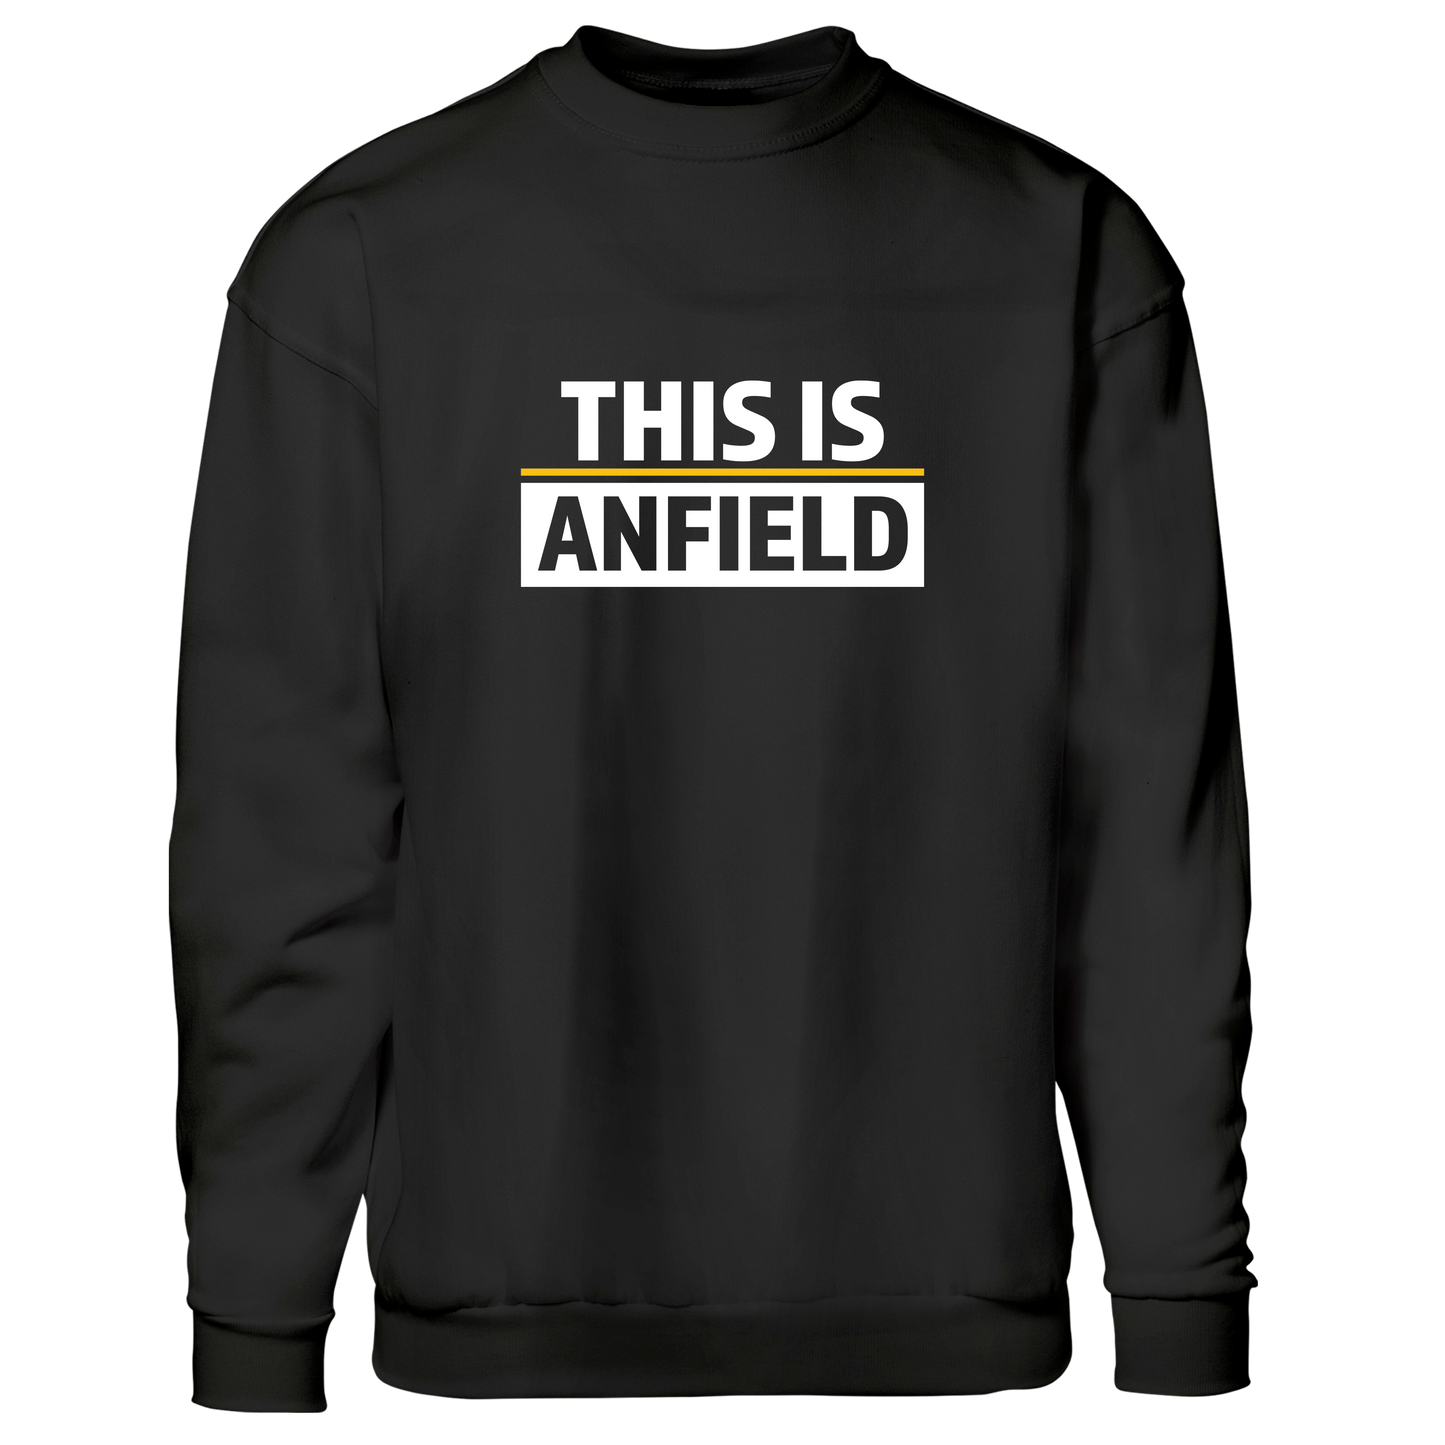 This is anfield - sweatshirt